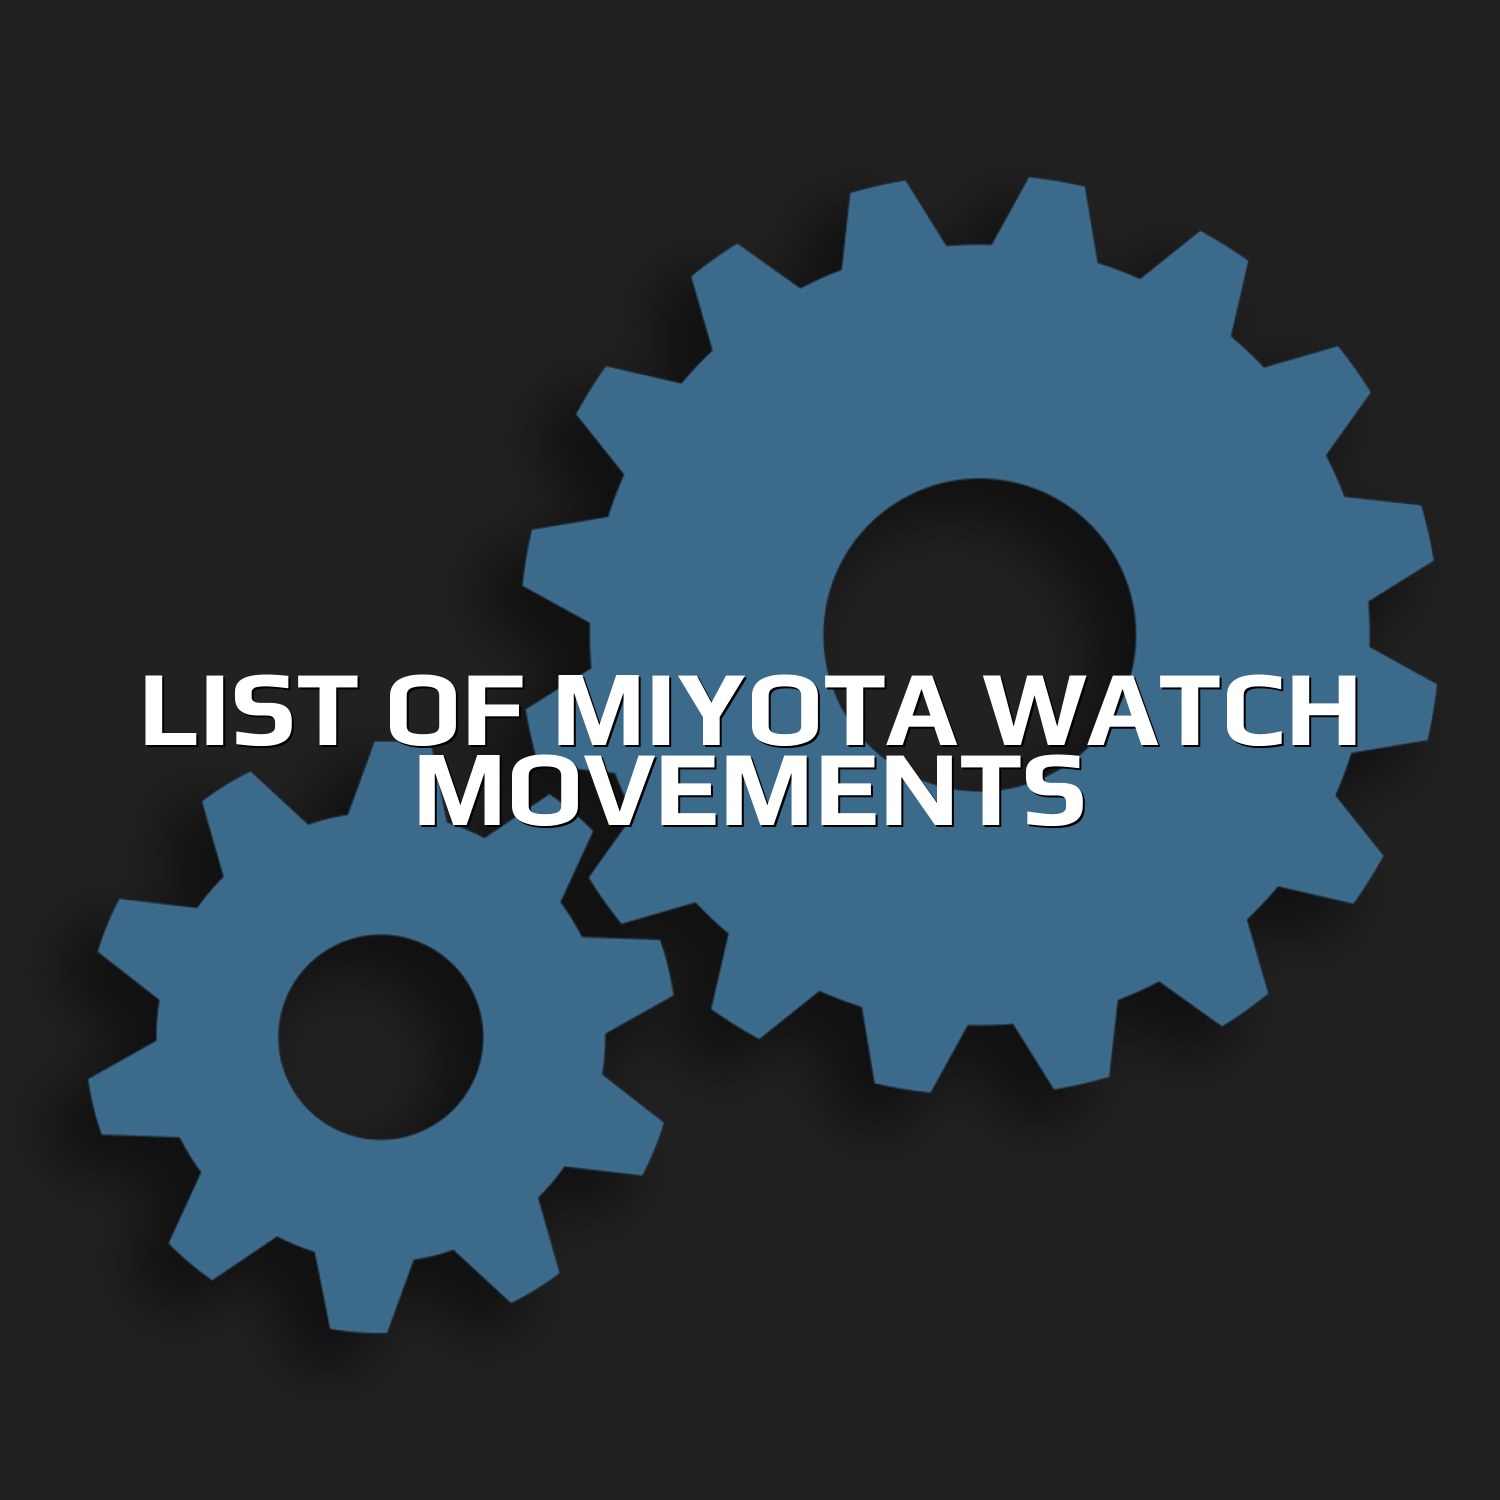 List of Miyota Watch Movements